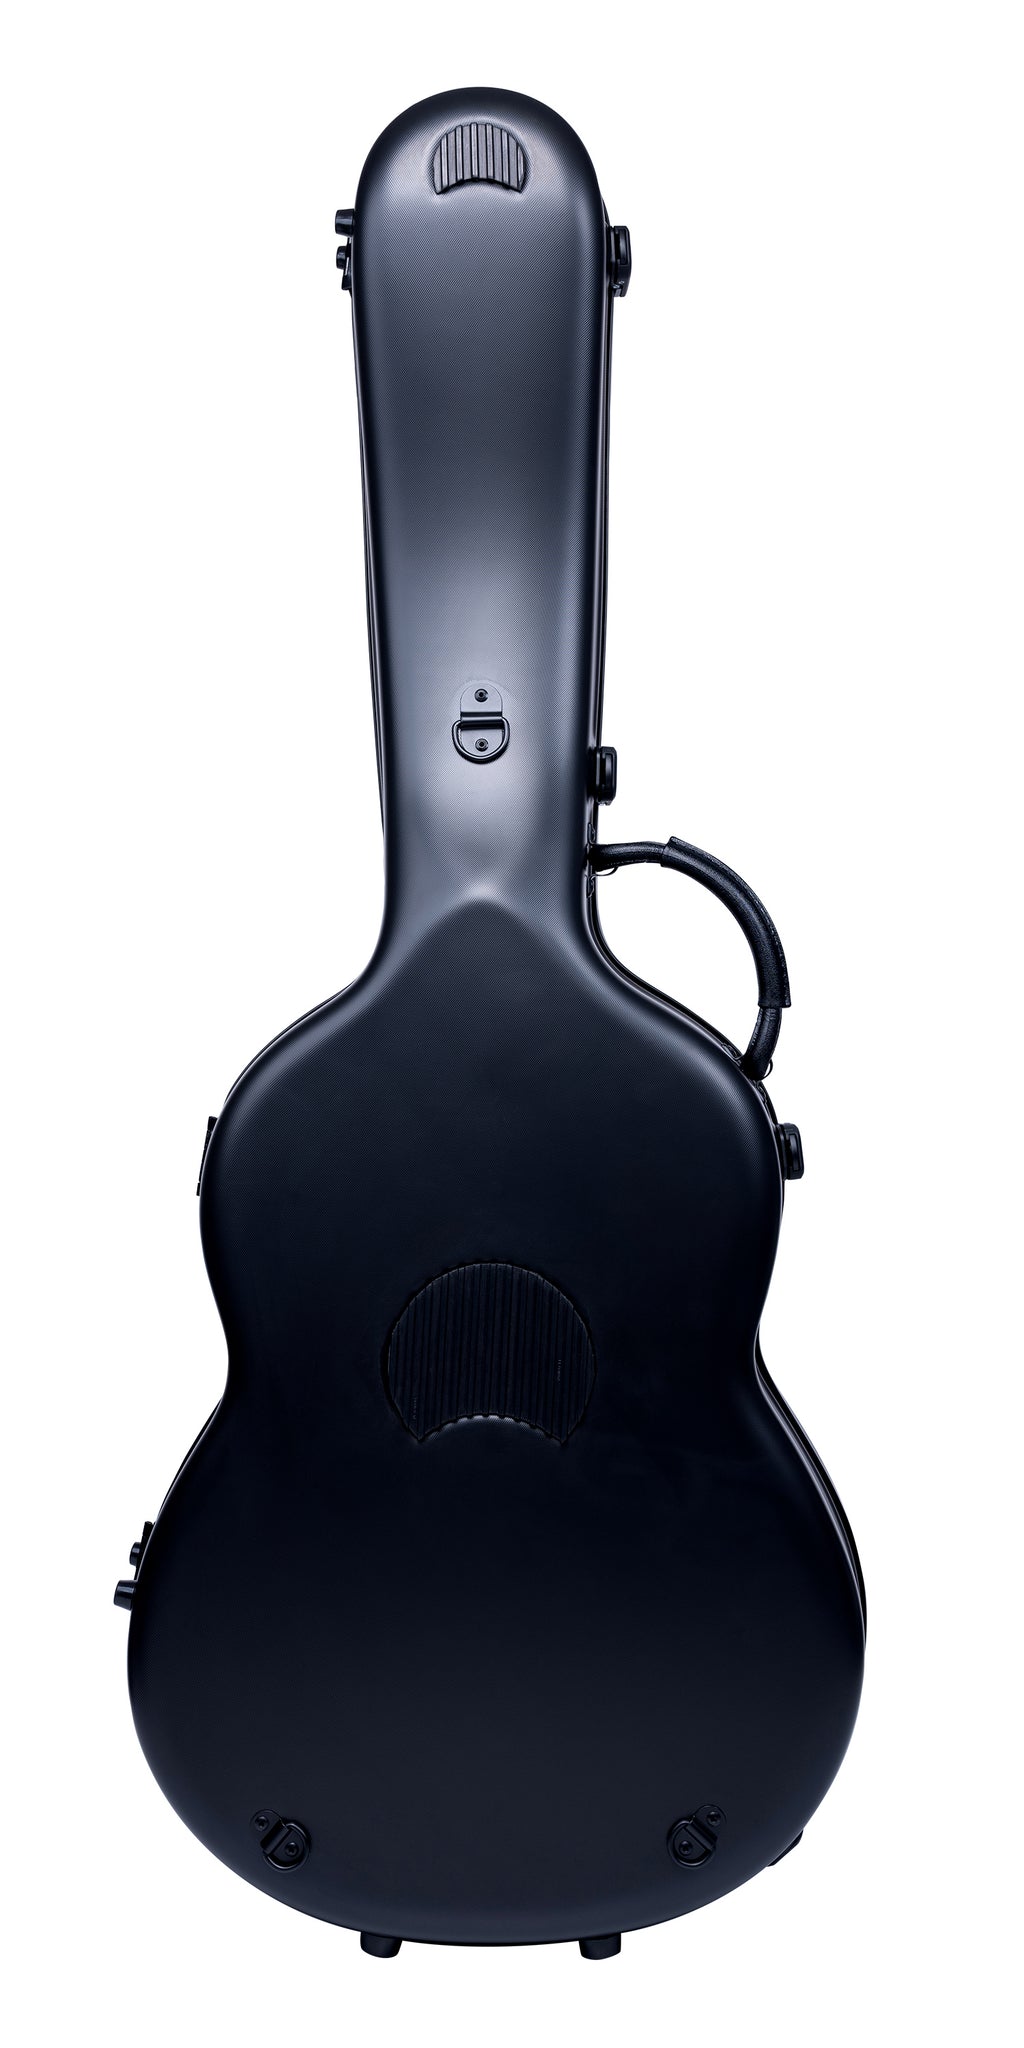 Etui rigide pour guitare classique CGC200 noir